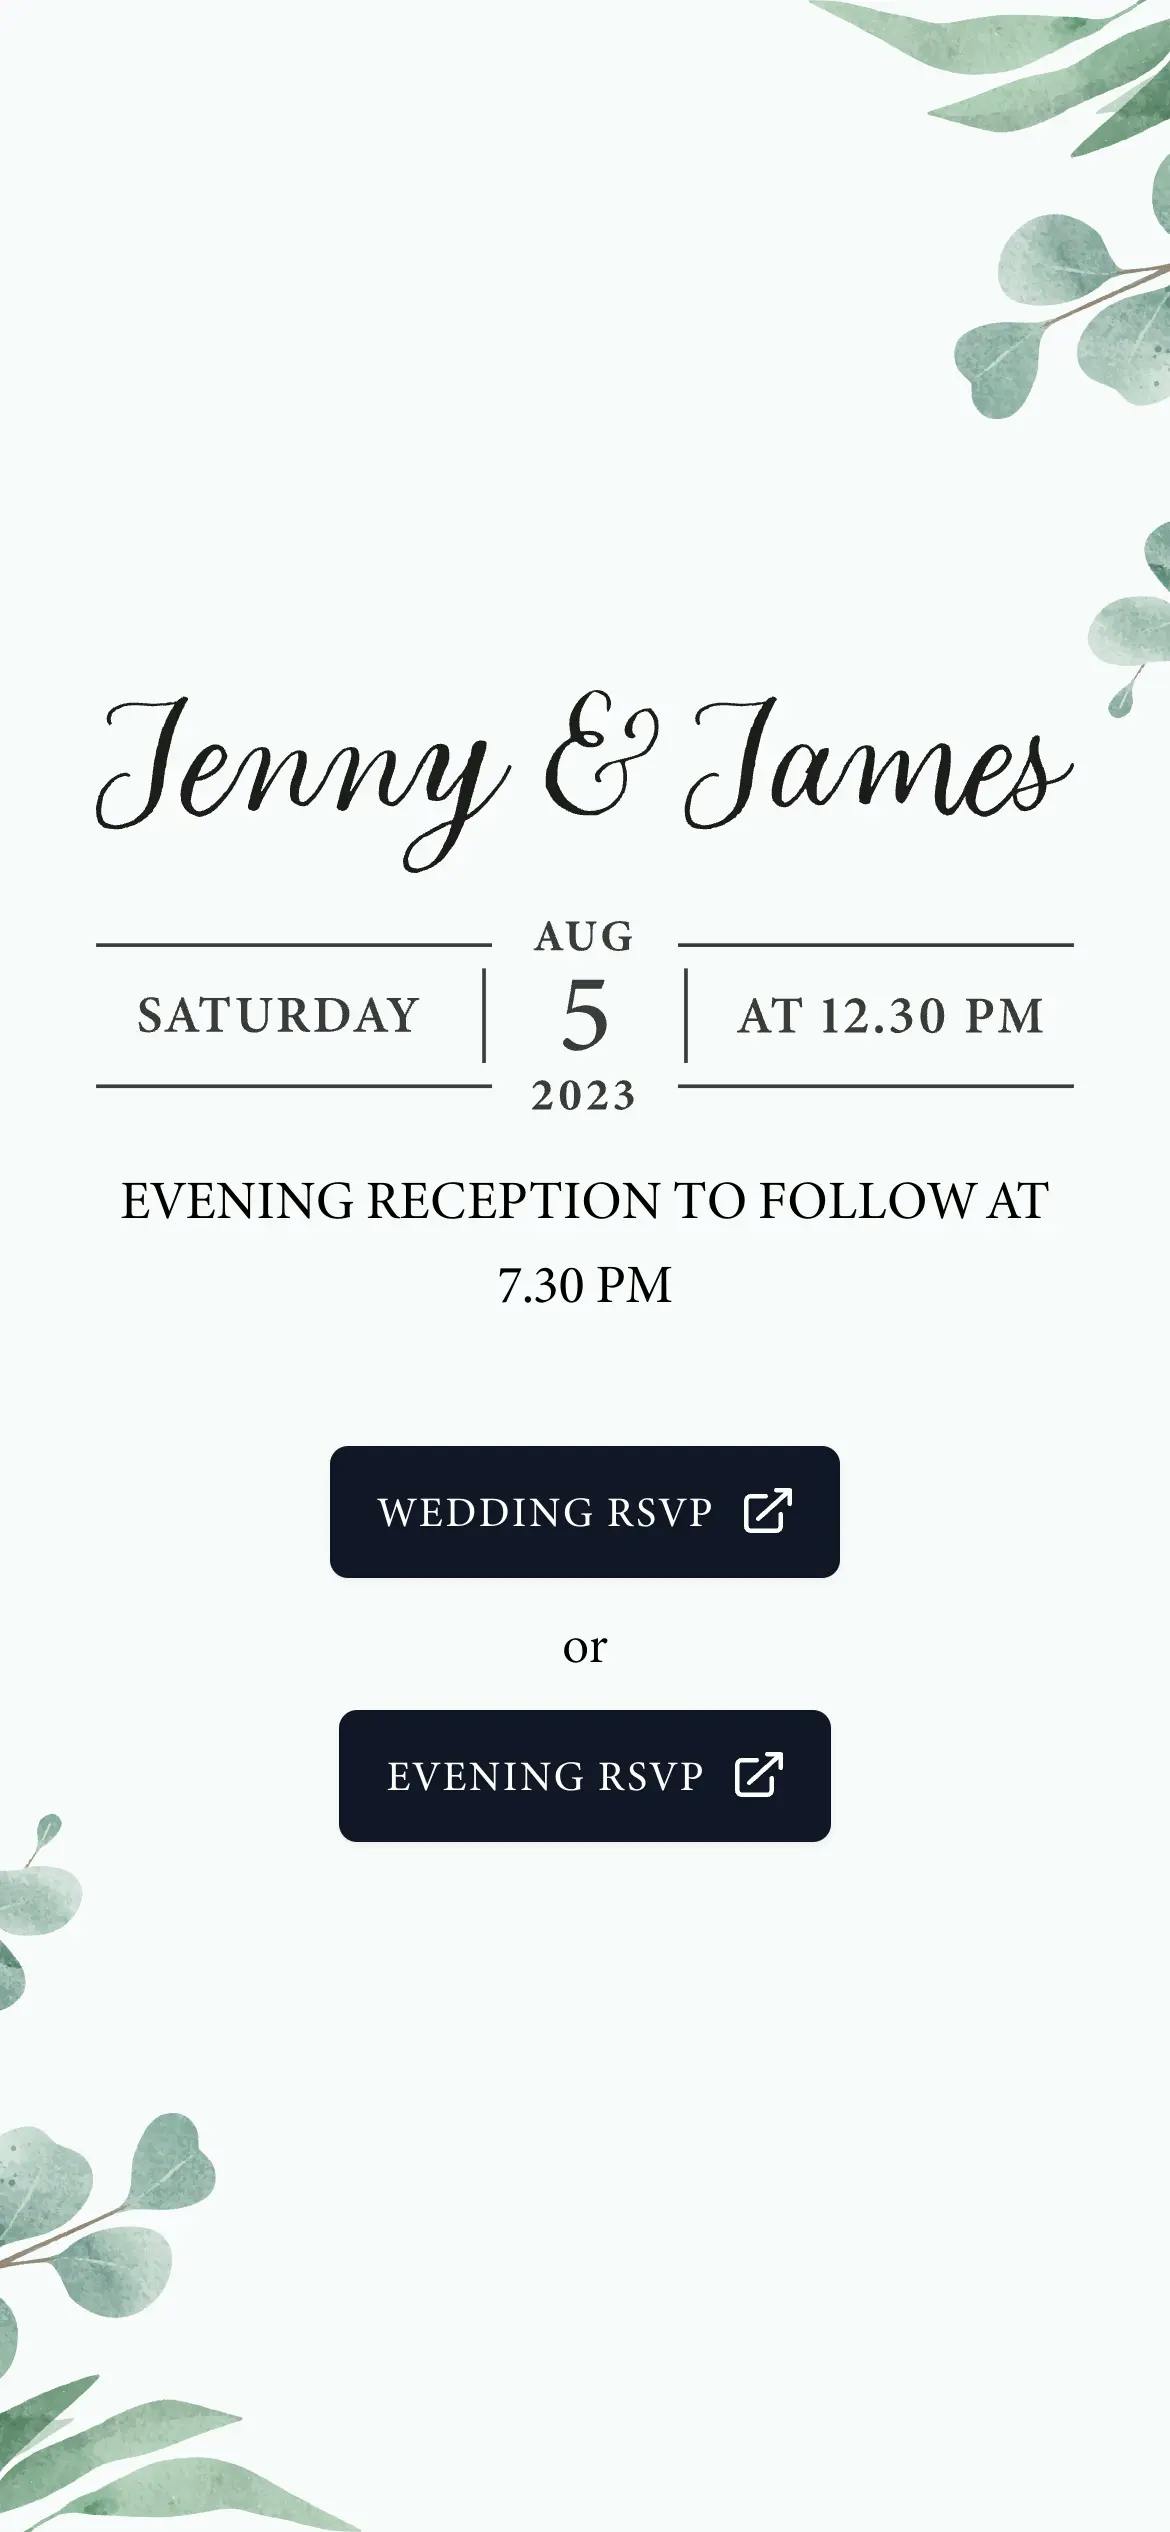 Jenny & James Wedding Home Page on Mobile